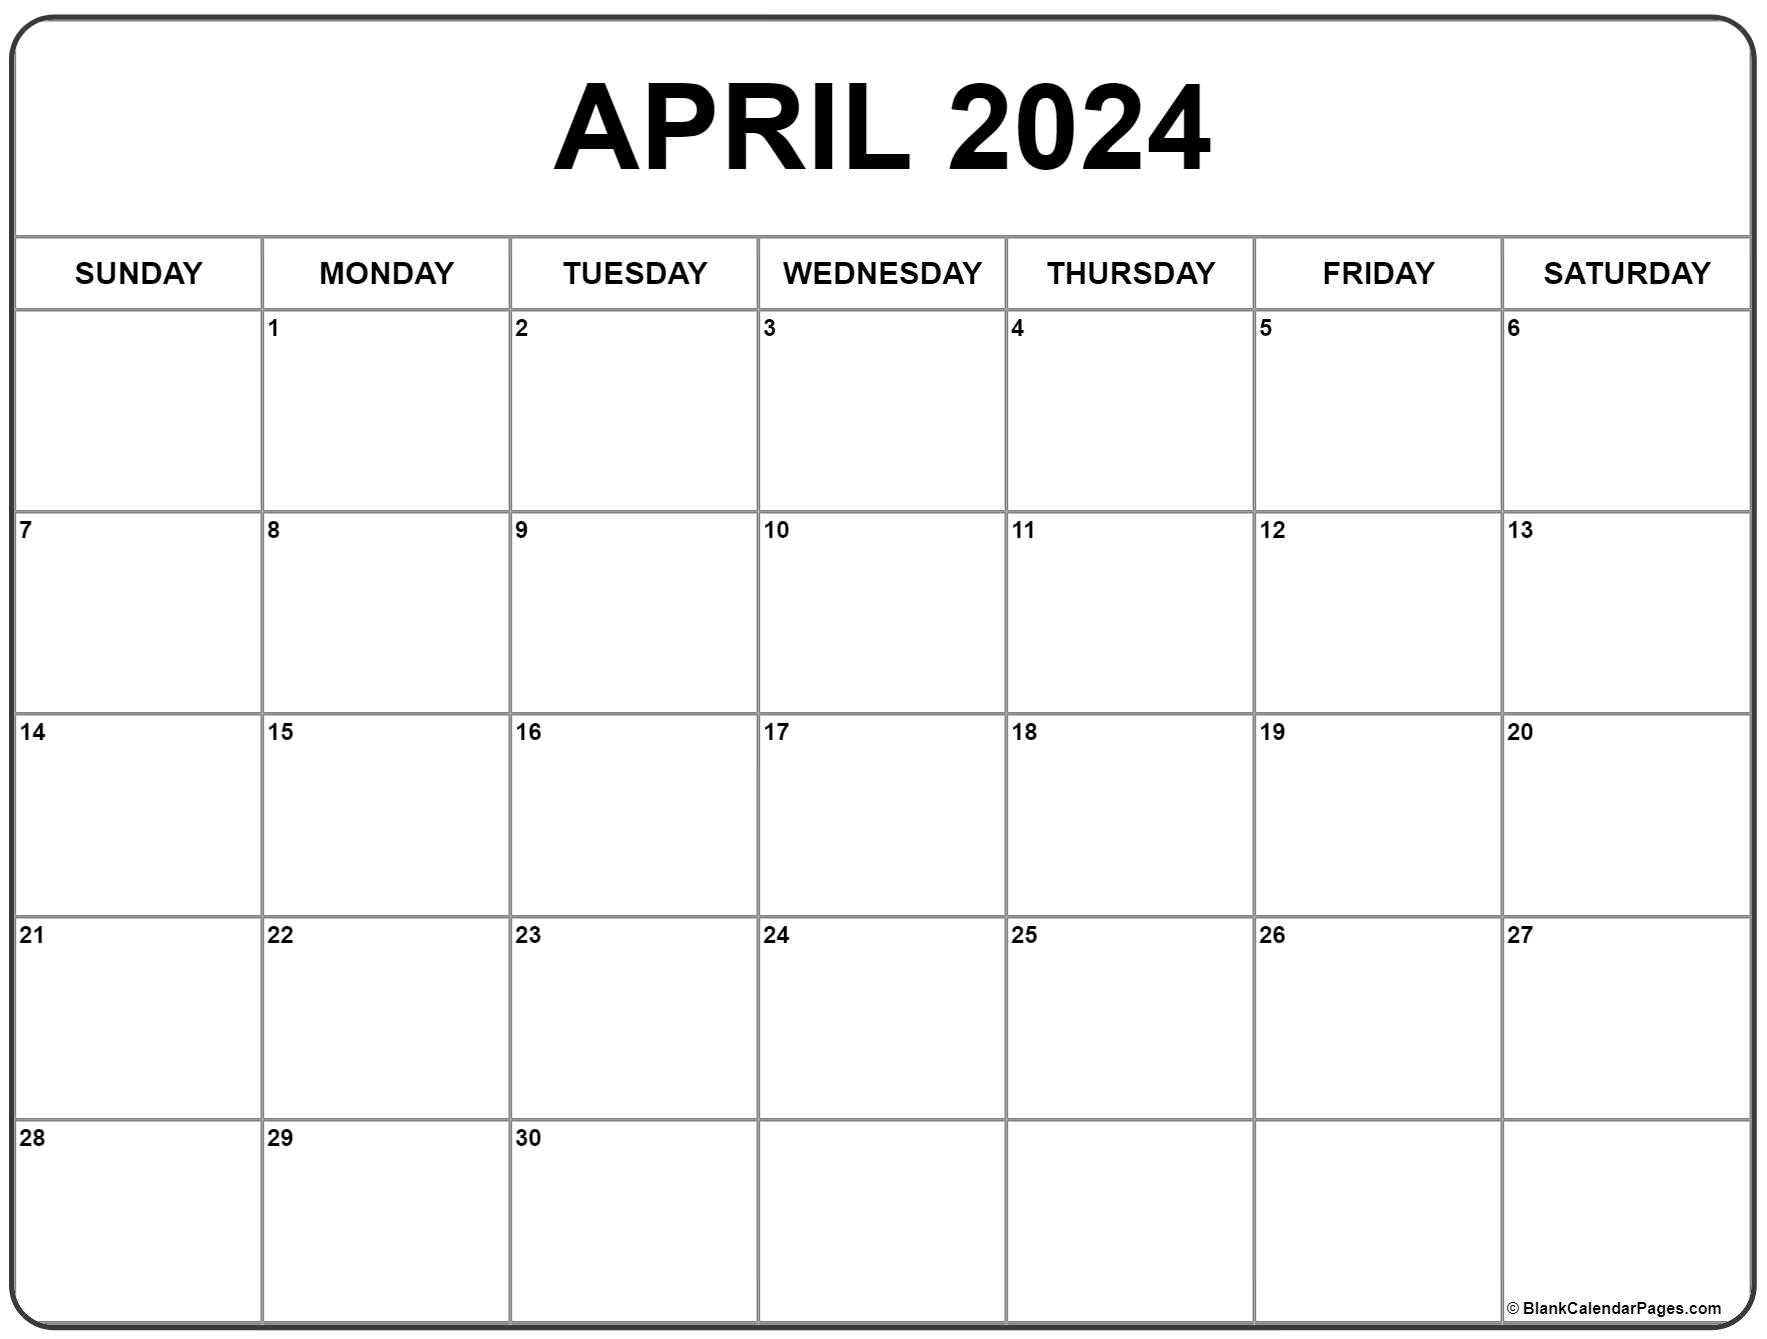 April 2024 Calendar | Free Printable Calendar for Calendar 2024 Printable April